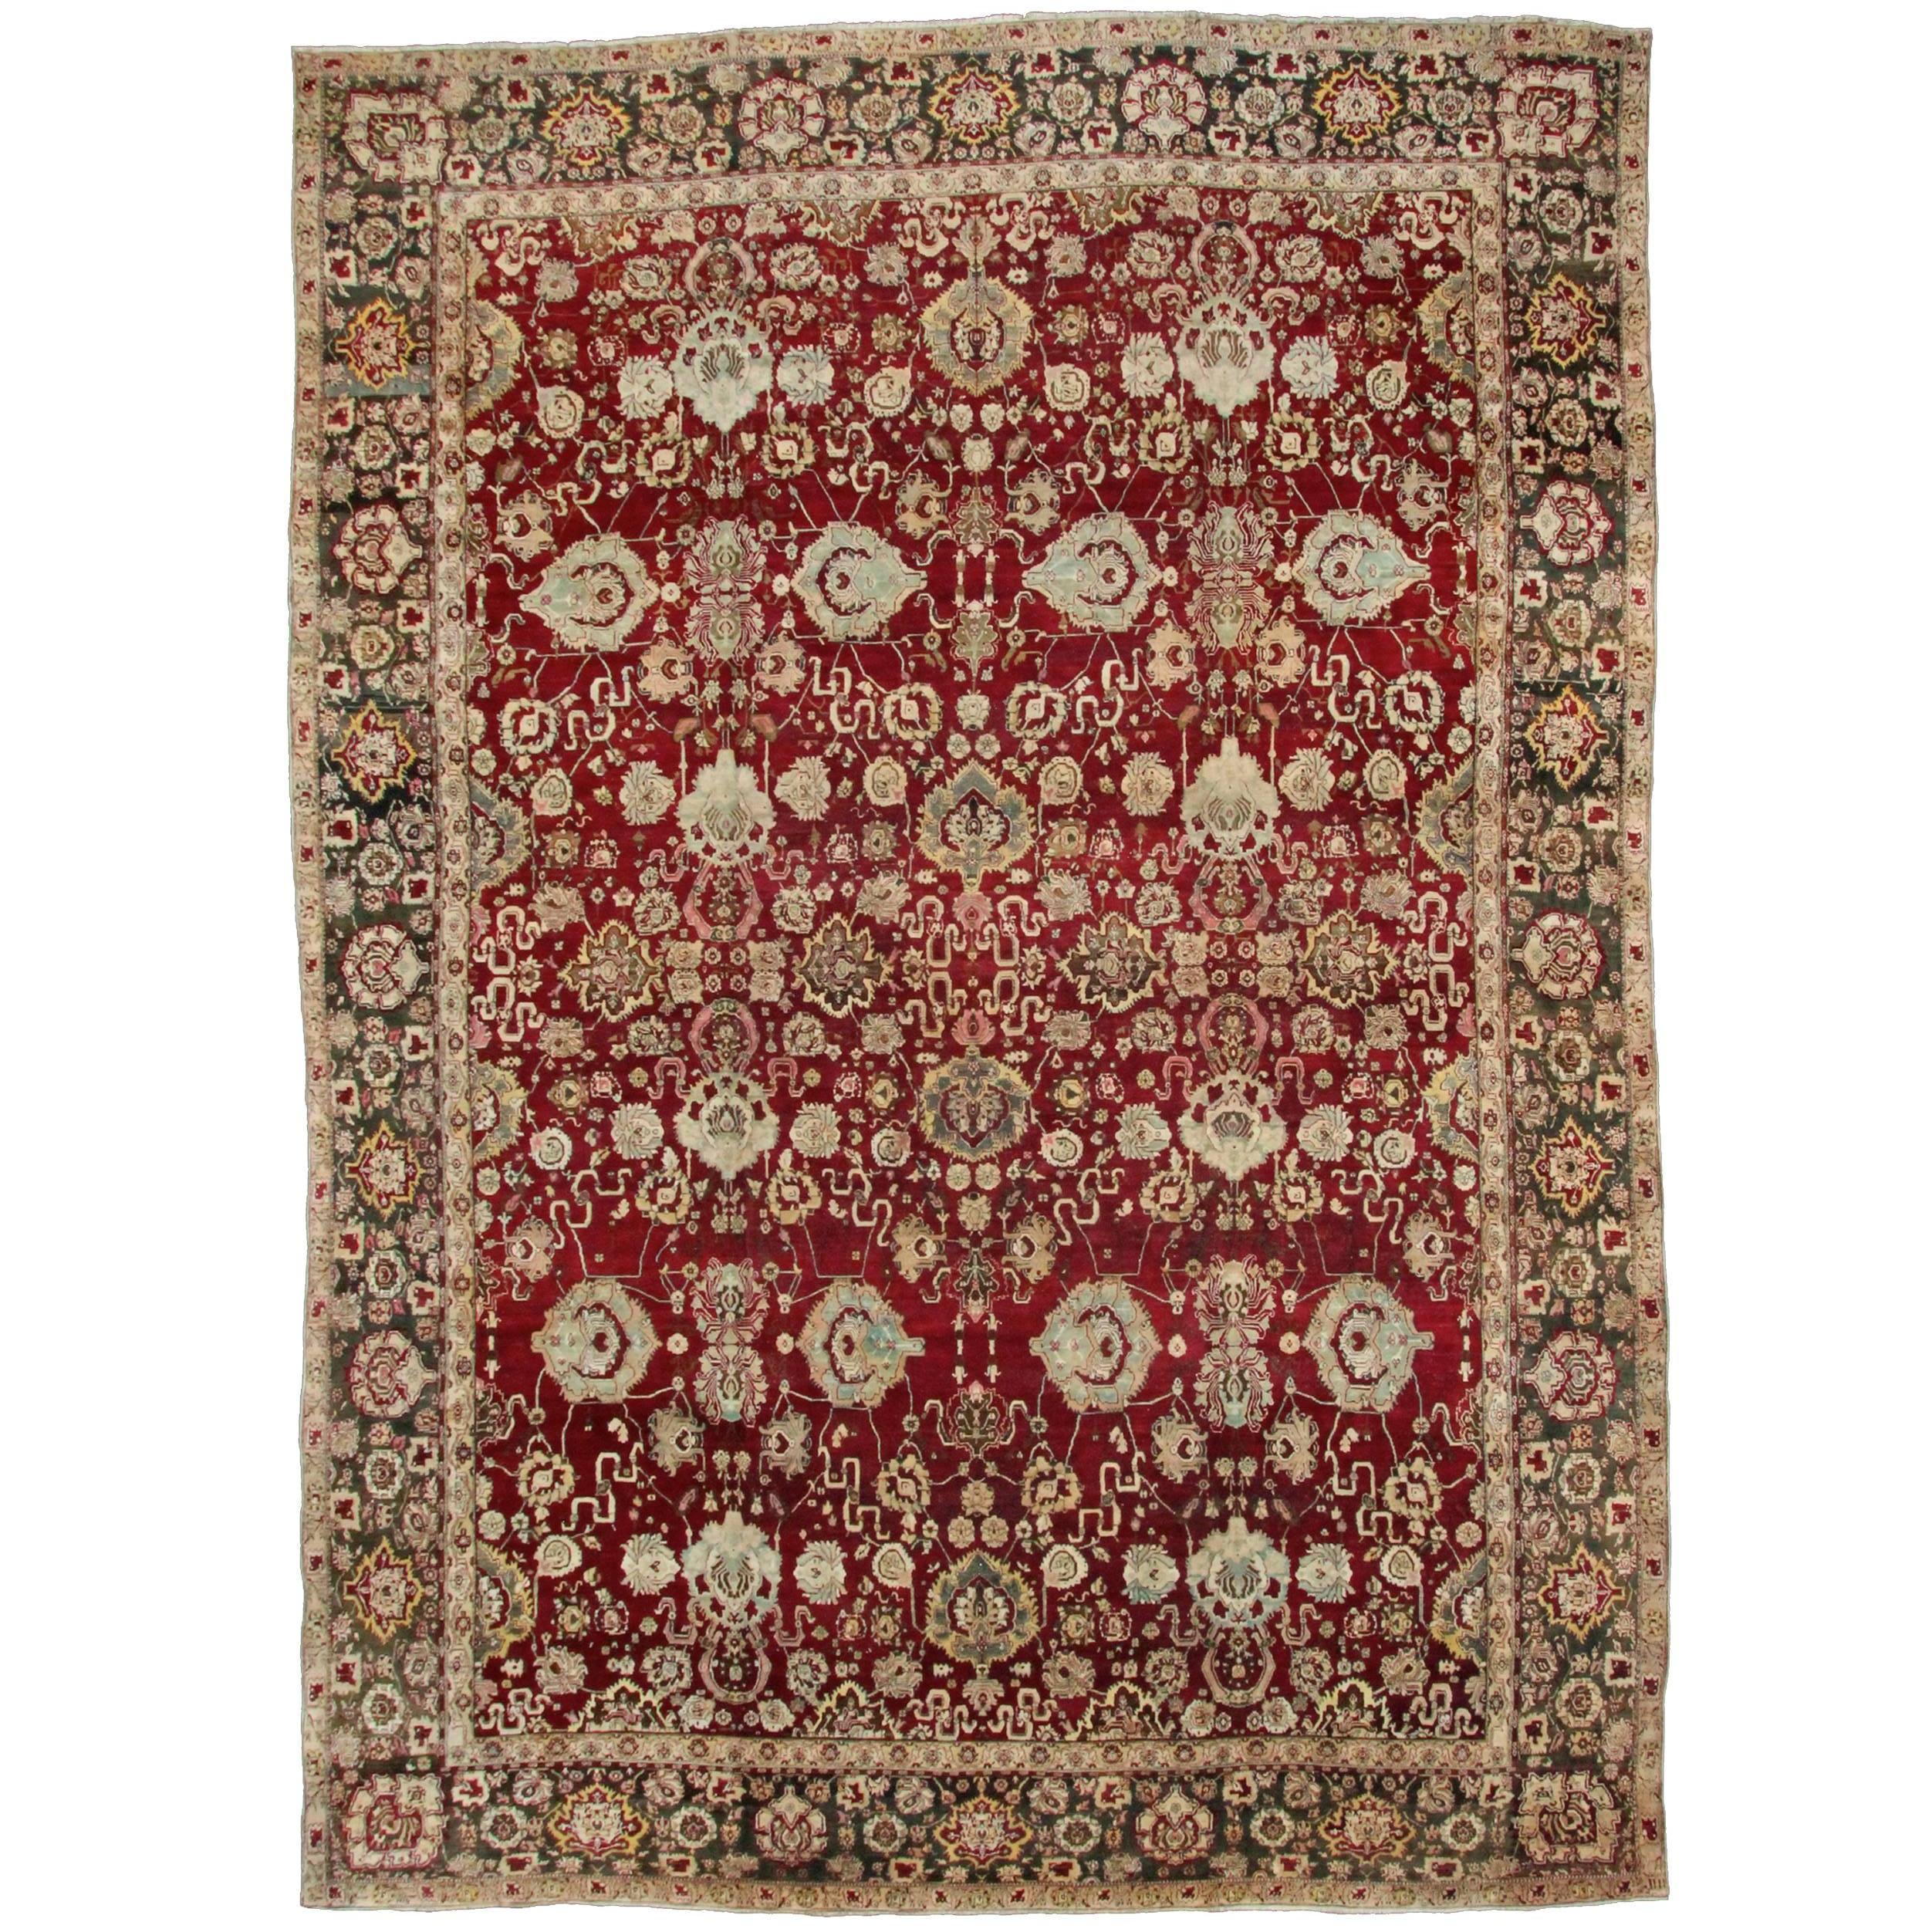 Antique Agra Carpet For Sale